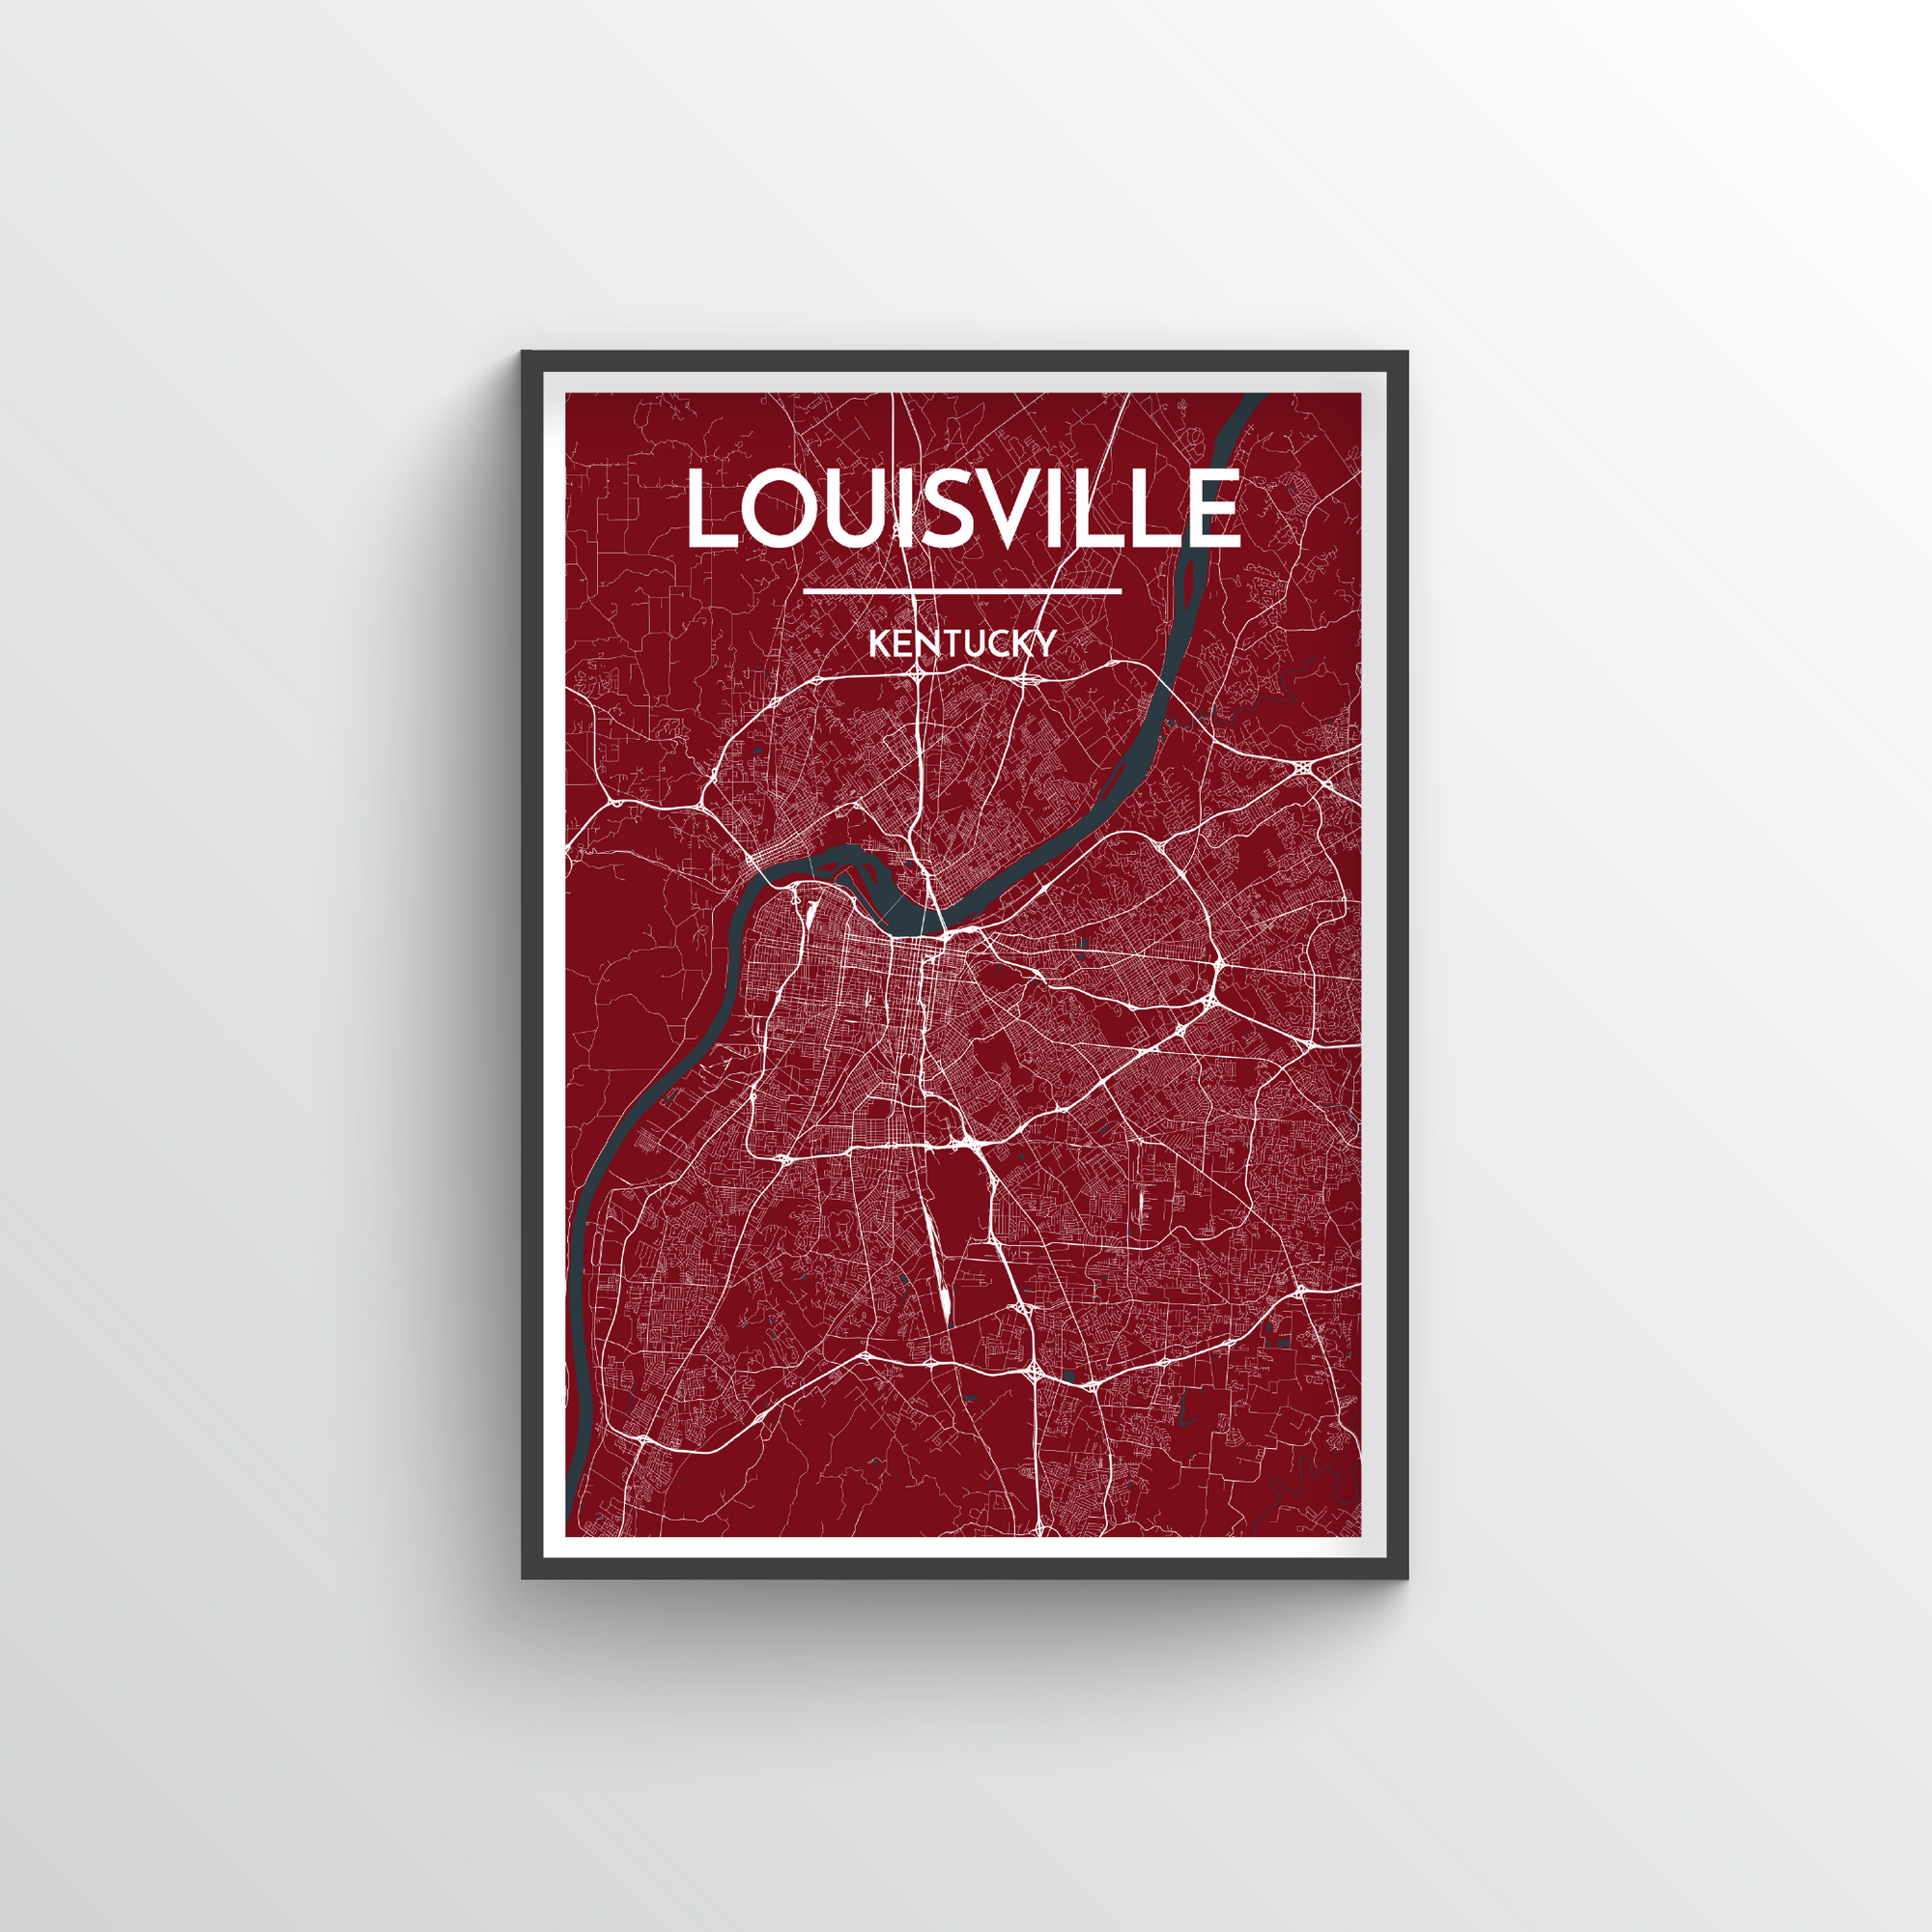 Louisville Illustration US Cities Poster, Unframed Print, Kentucky State  Wall Art Poster